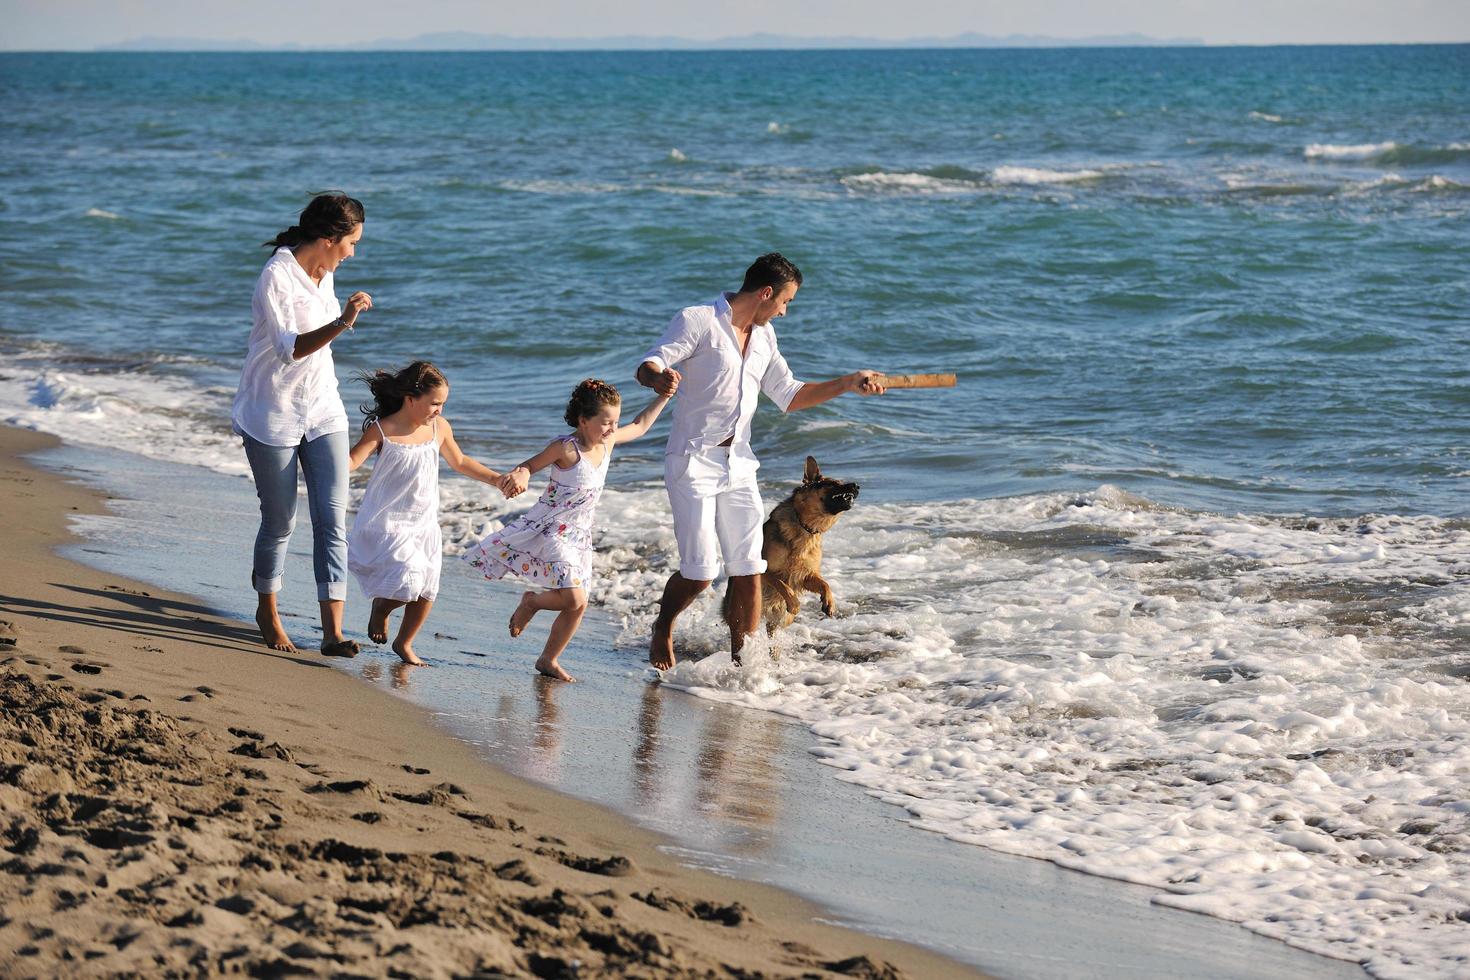 gelukkig familie spelen met hond Aan strand foto